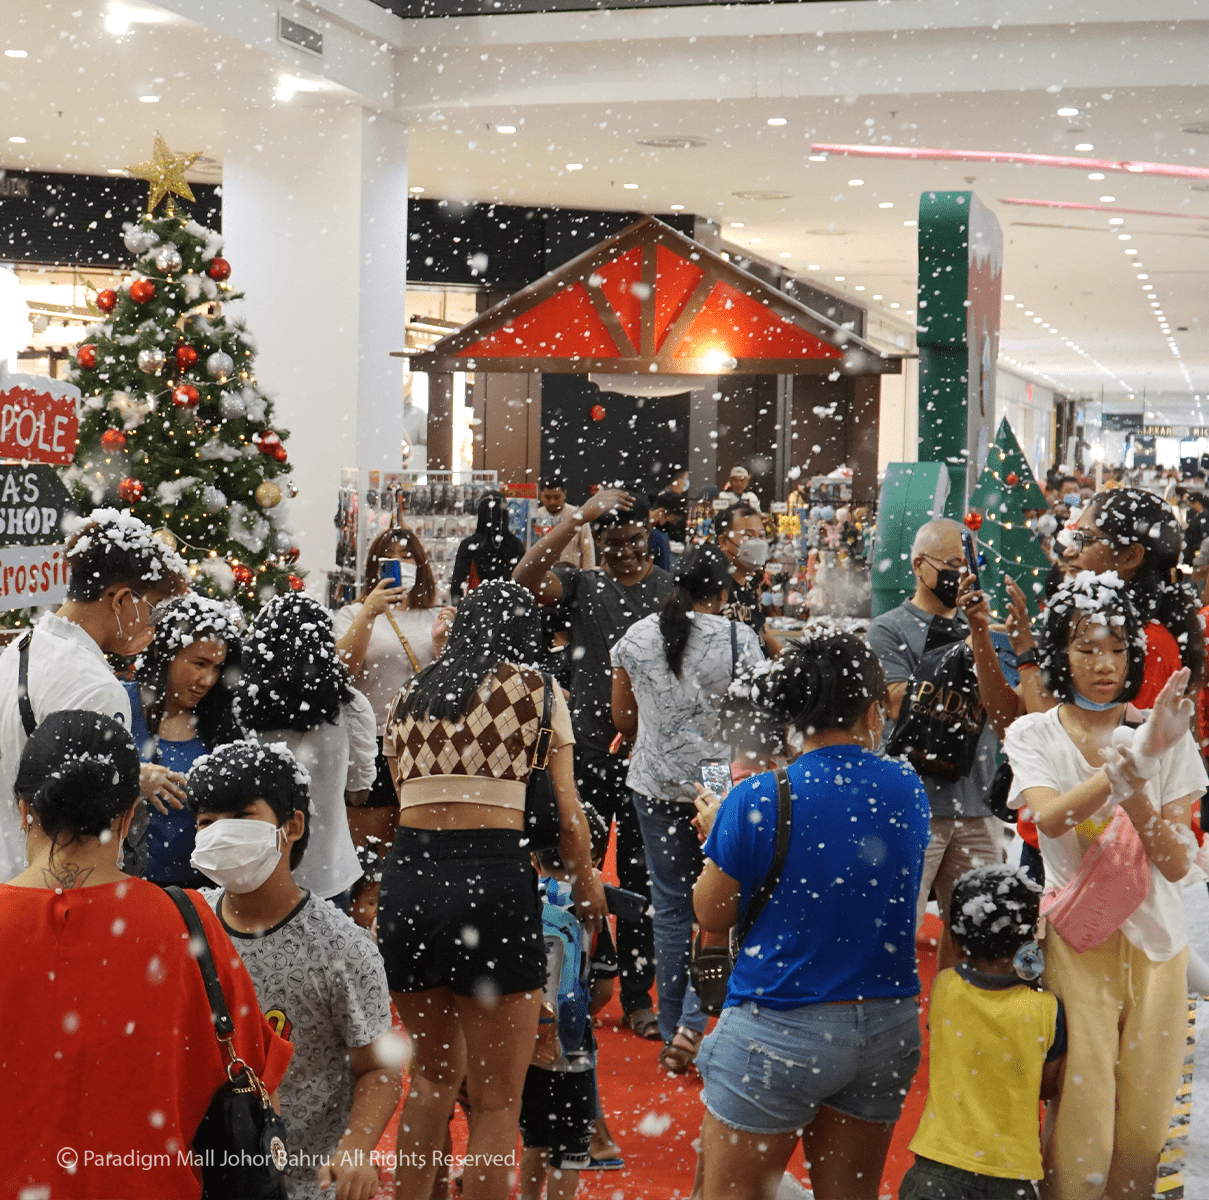 Paradigm Mall Johor Bahru Christmas - snow